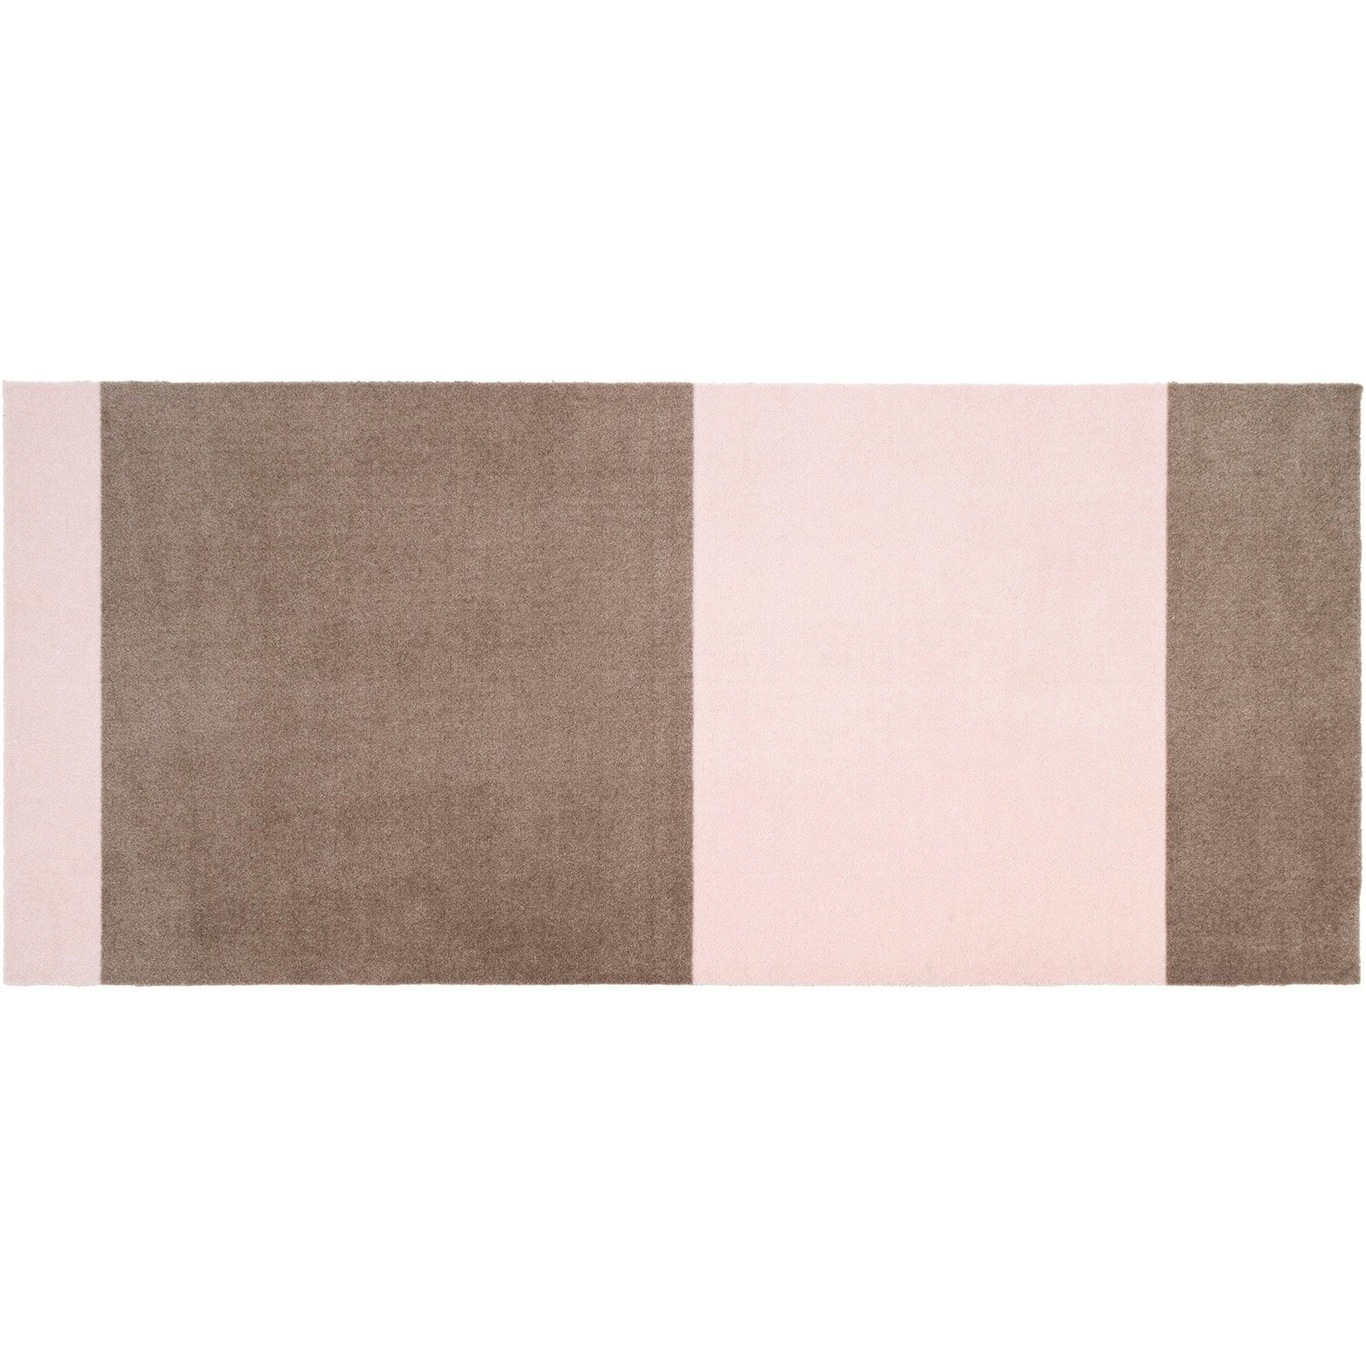 Stripes Matta Sand/Light Rose, 90x200 cm